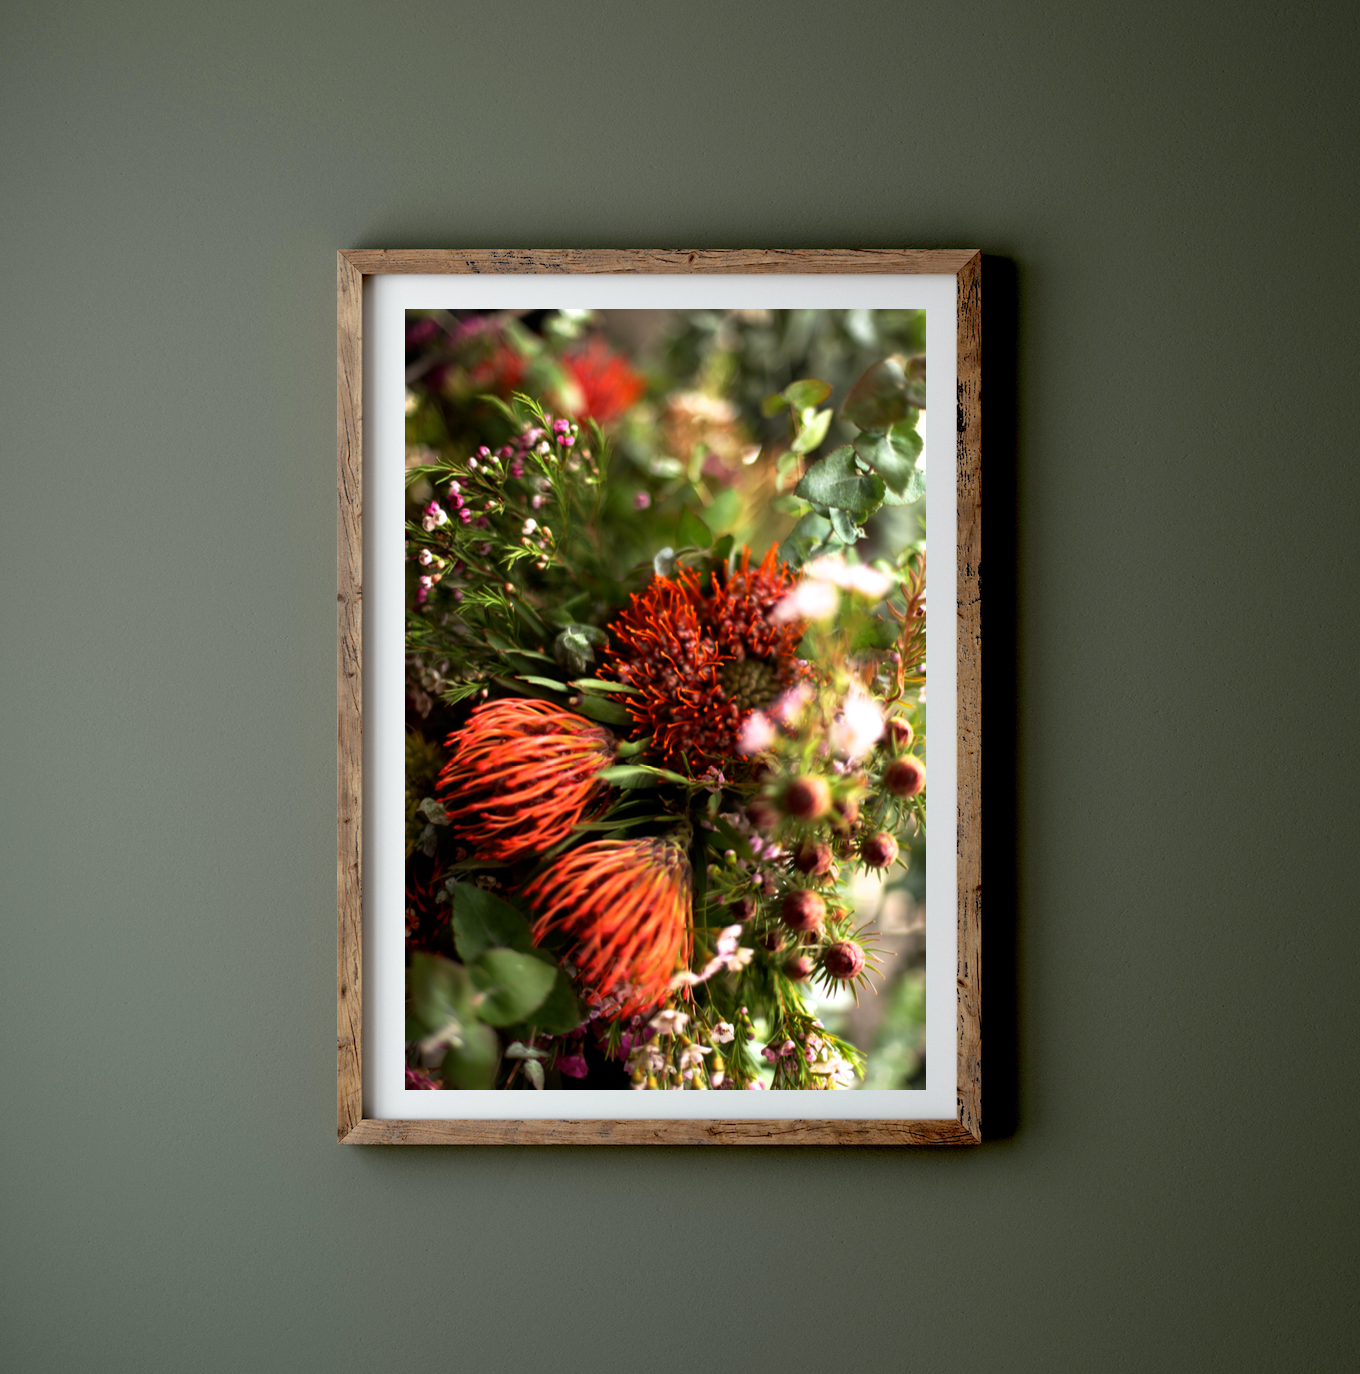 Australian Native Wildflowers II - Geraldton Wax Flower Orange Pincushion Botanical Fine Photography Print